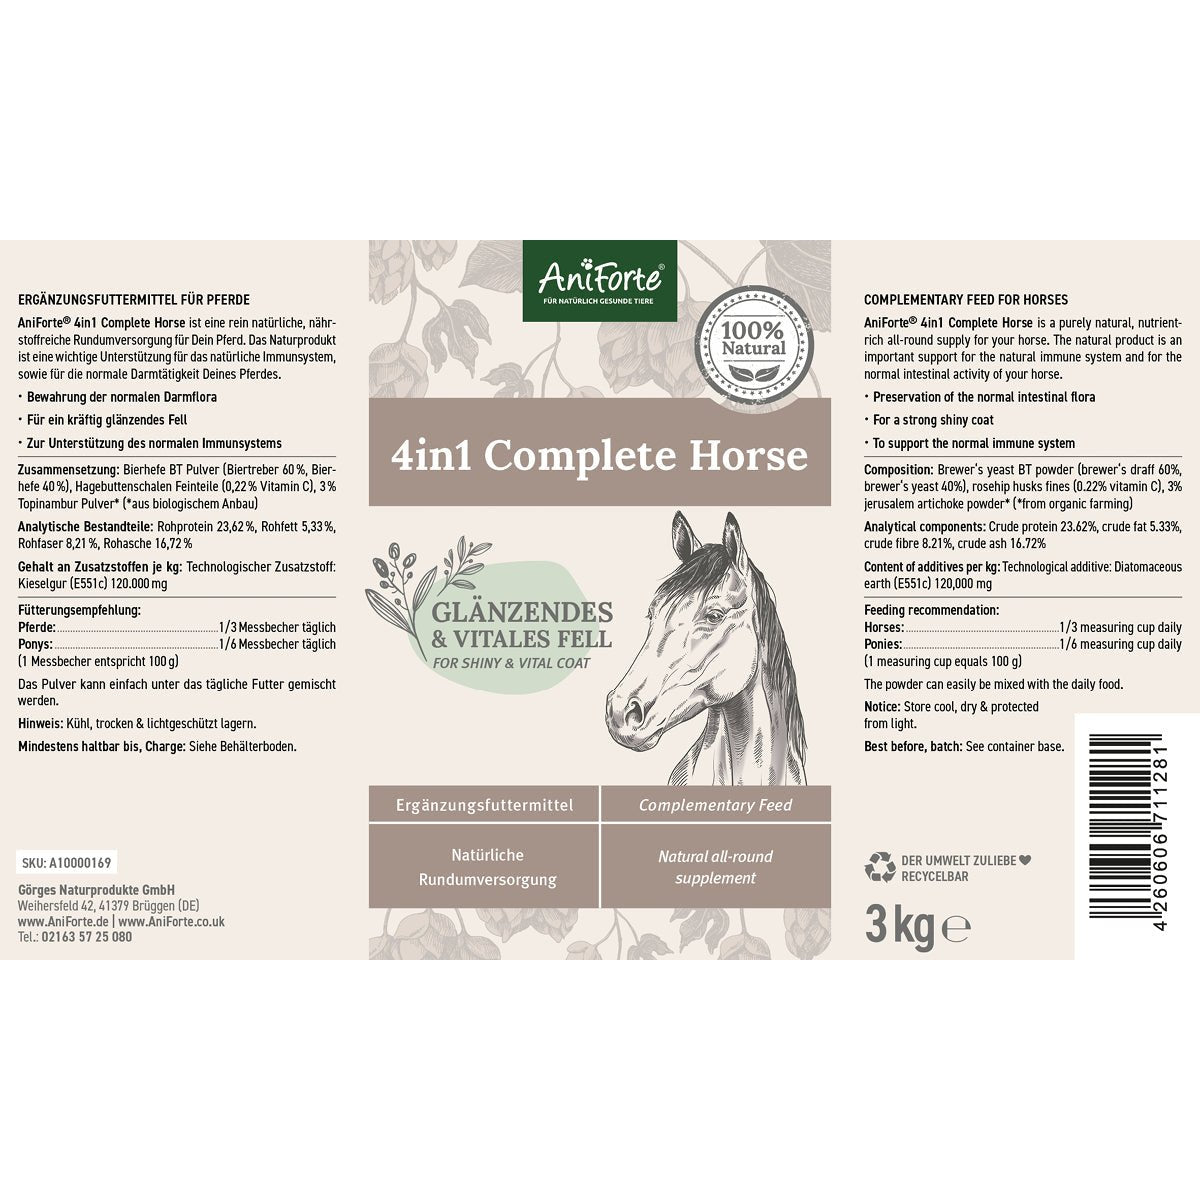 4in1 Complete Horse - AniForte